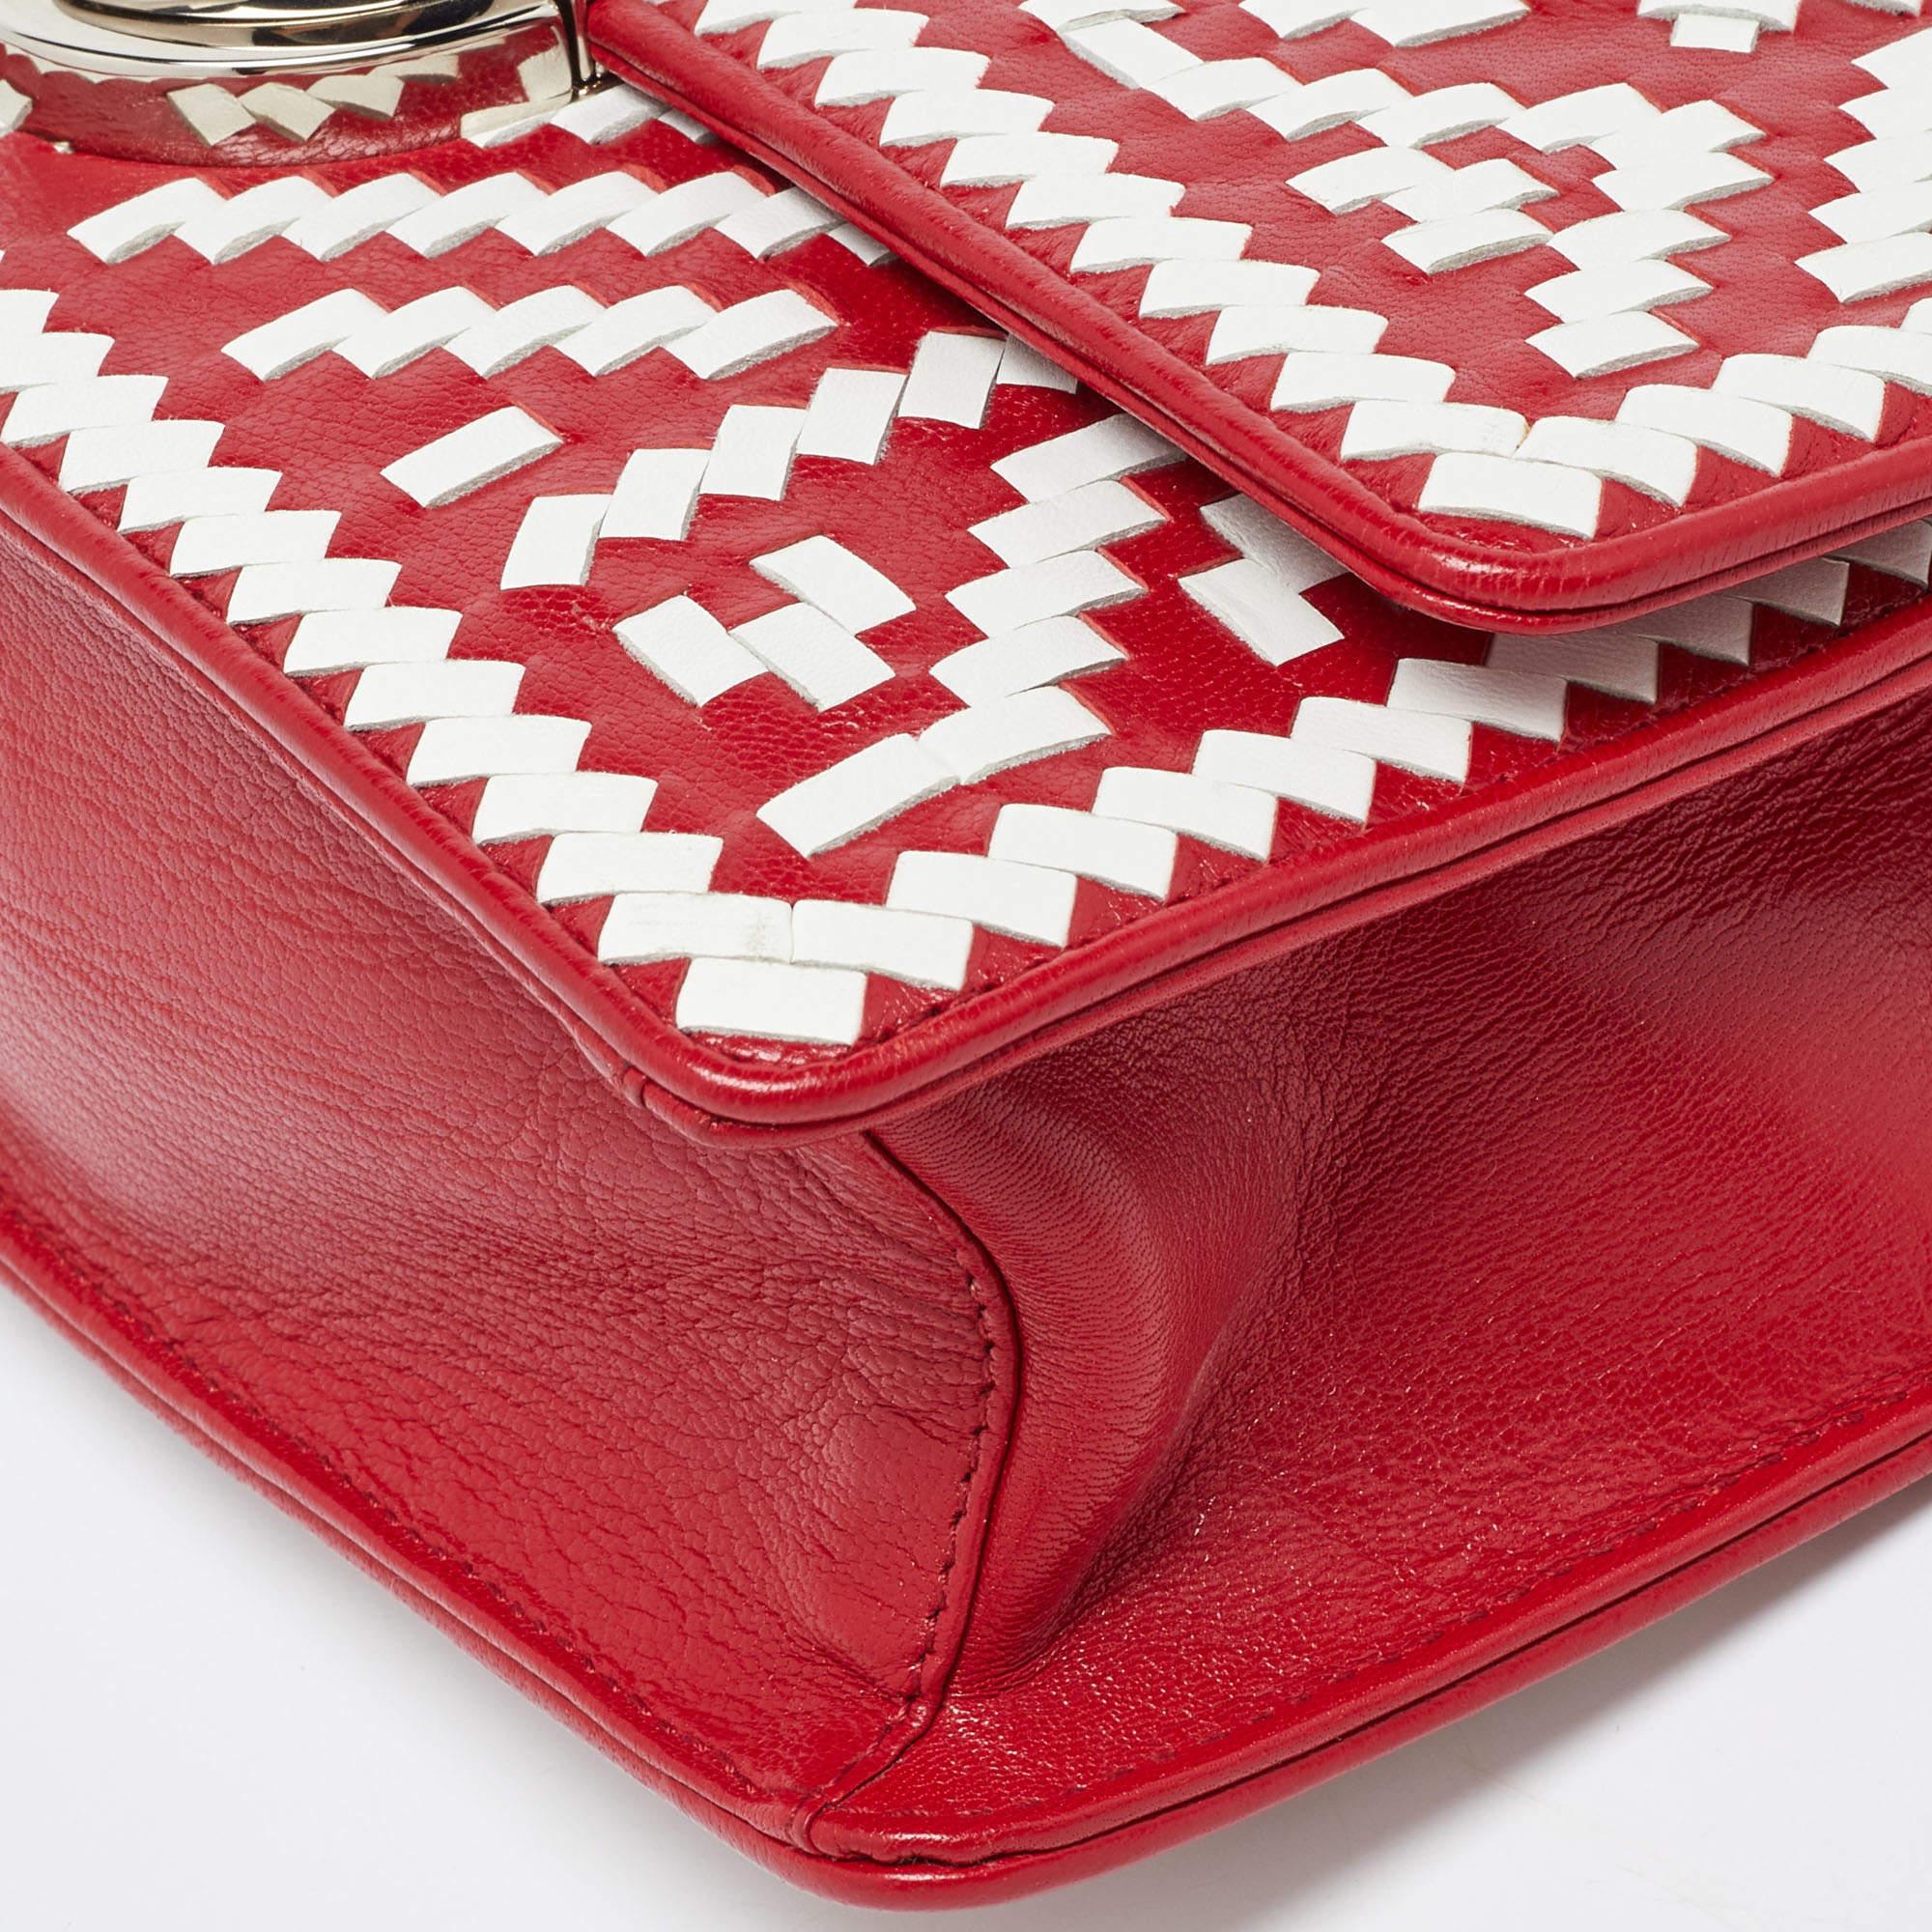 Prada Red/White Madras Woven Leather Pushlock Flap Bag 4